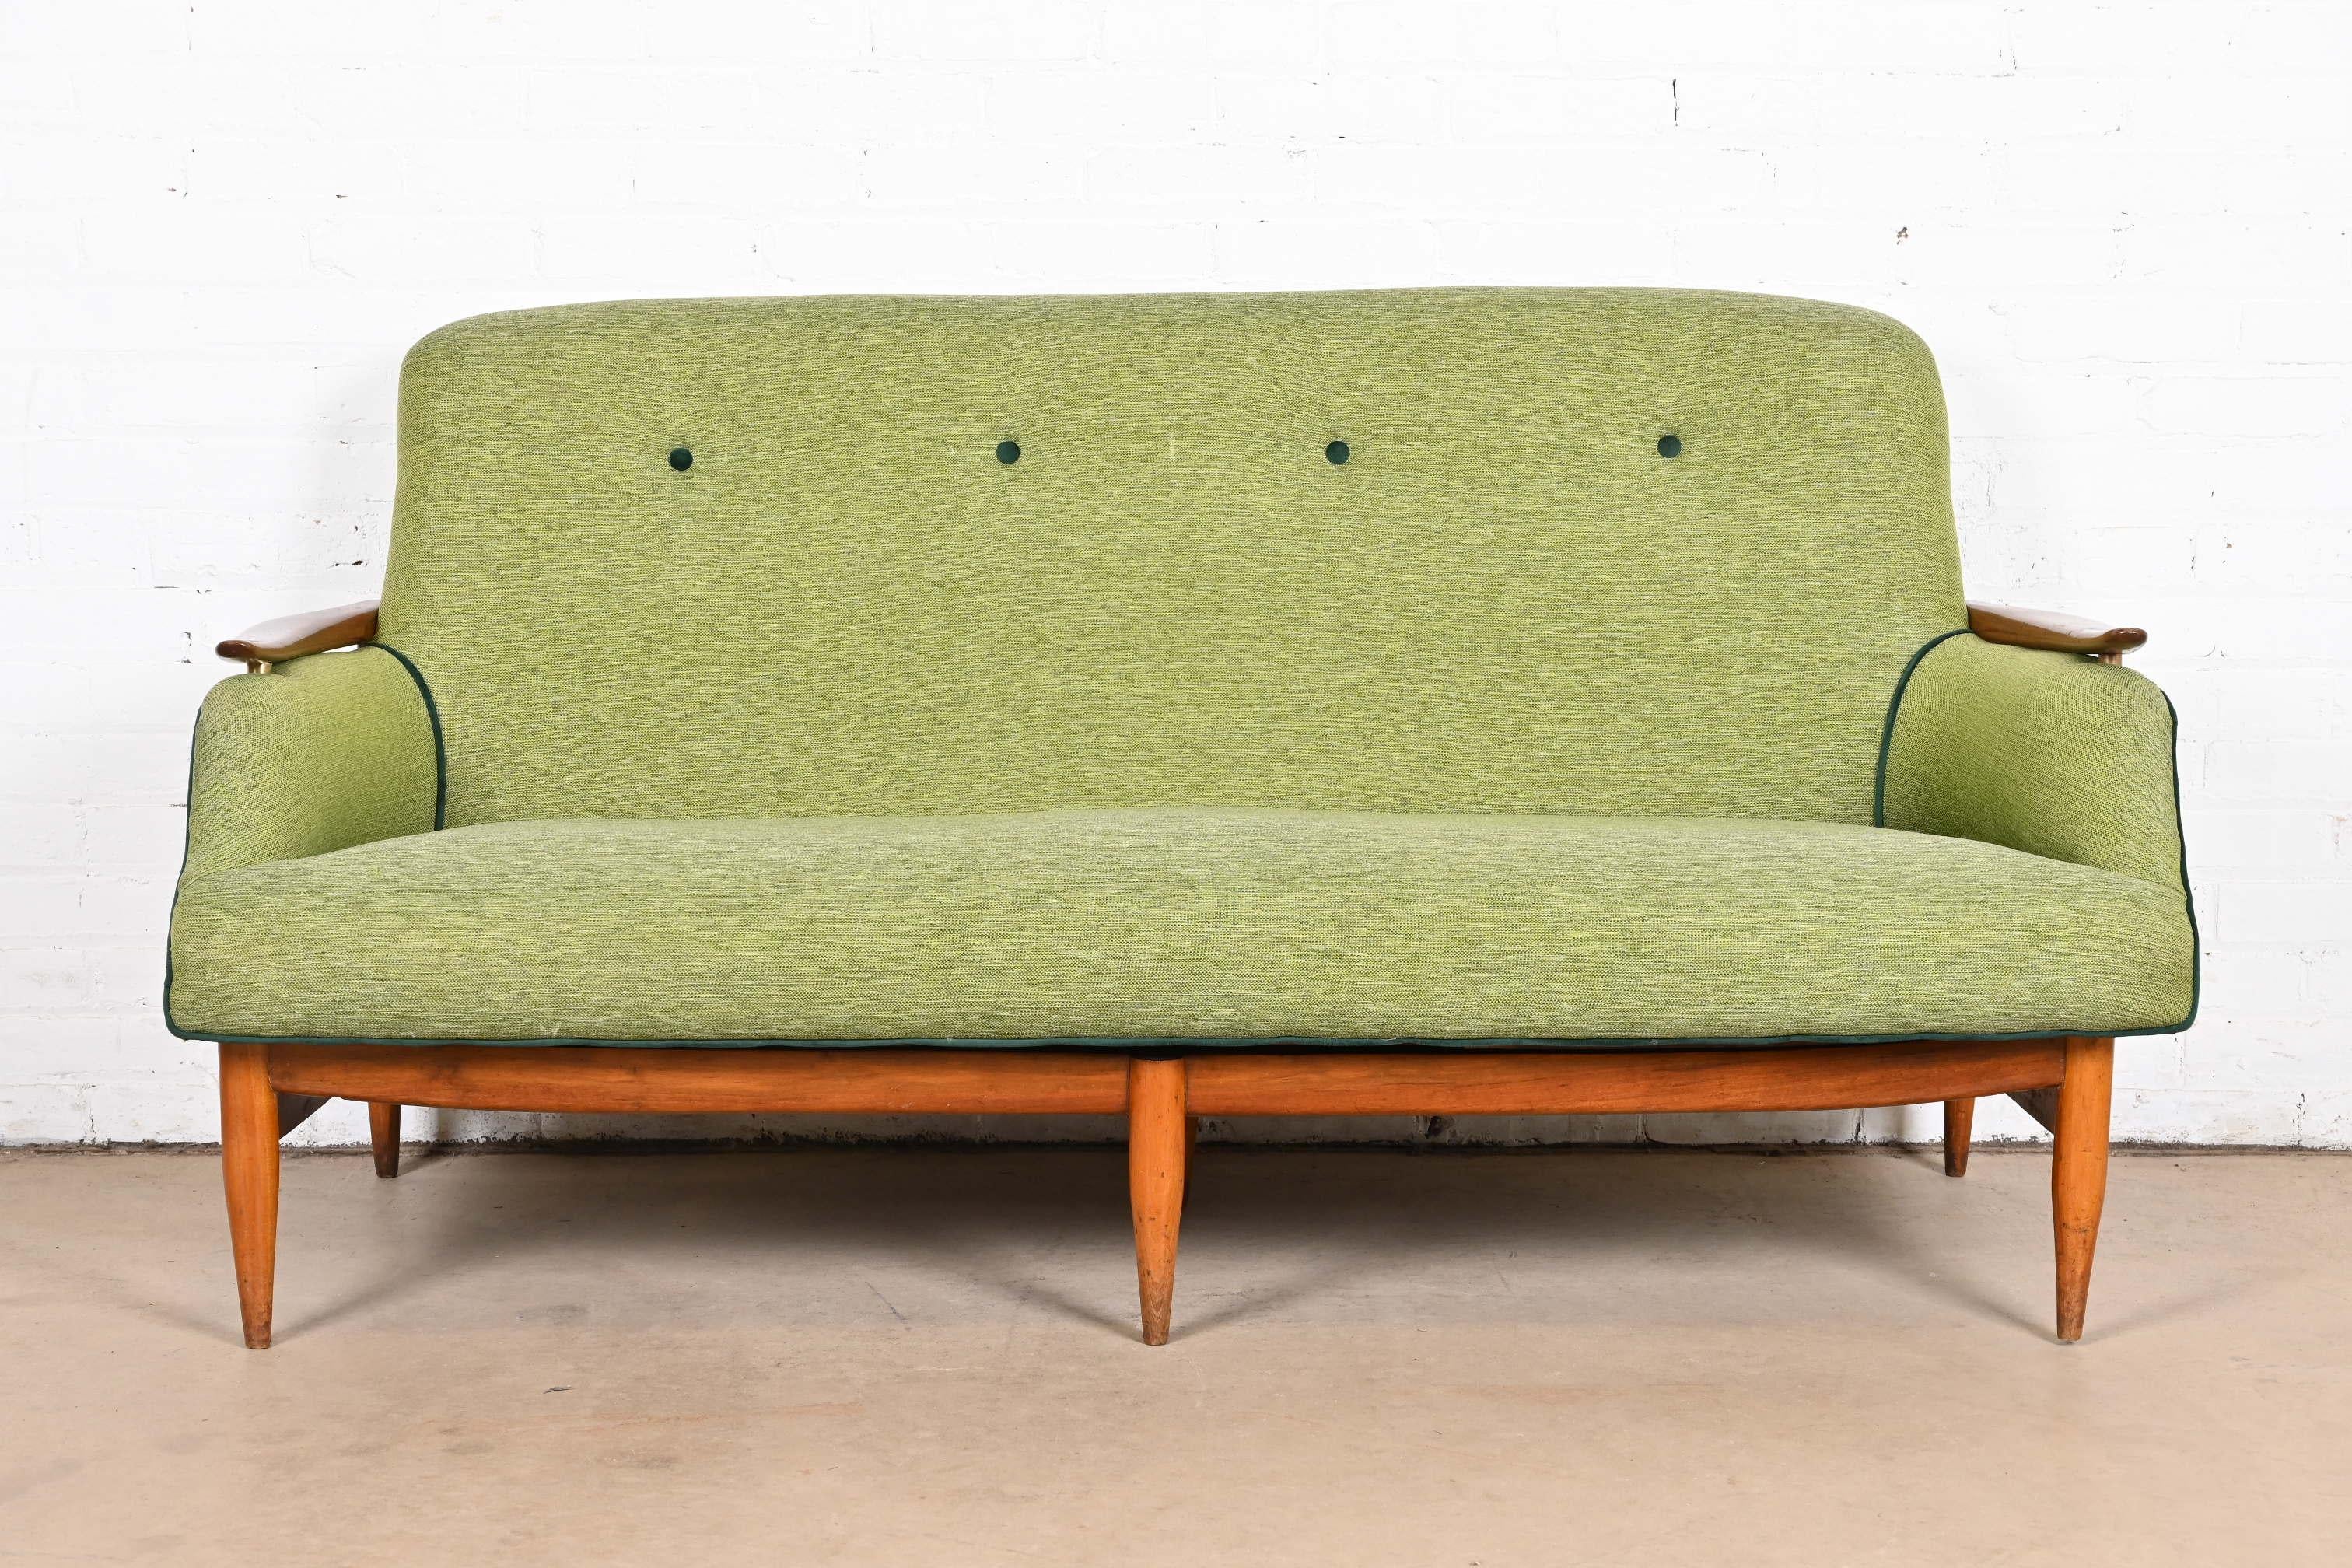 Finn Juhl Dänisches modernes gepolstertes, geformtes Teakholz-Sofa, 1950er Jahre (Skandinavische Moderne) im Angebot